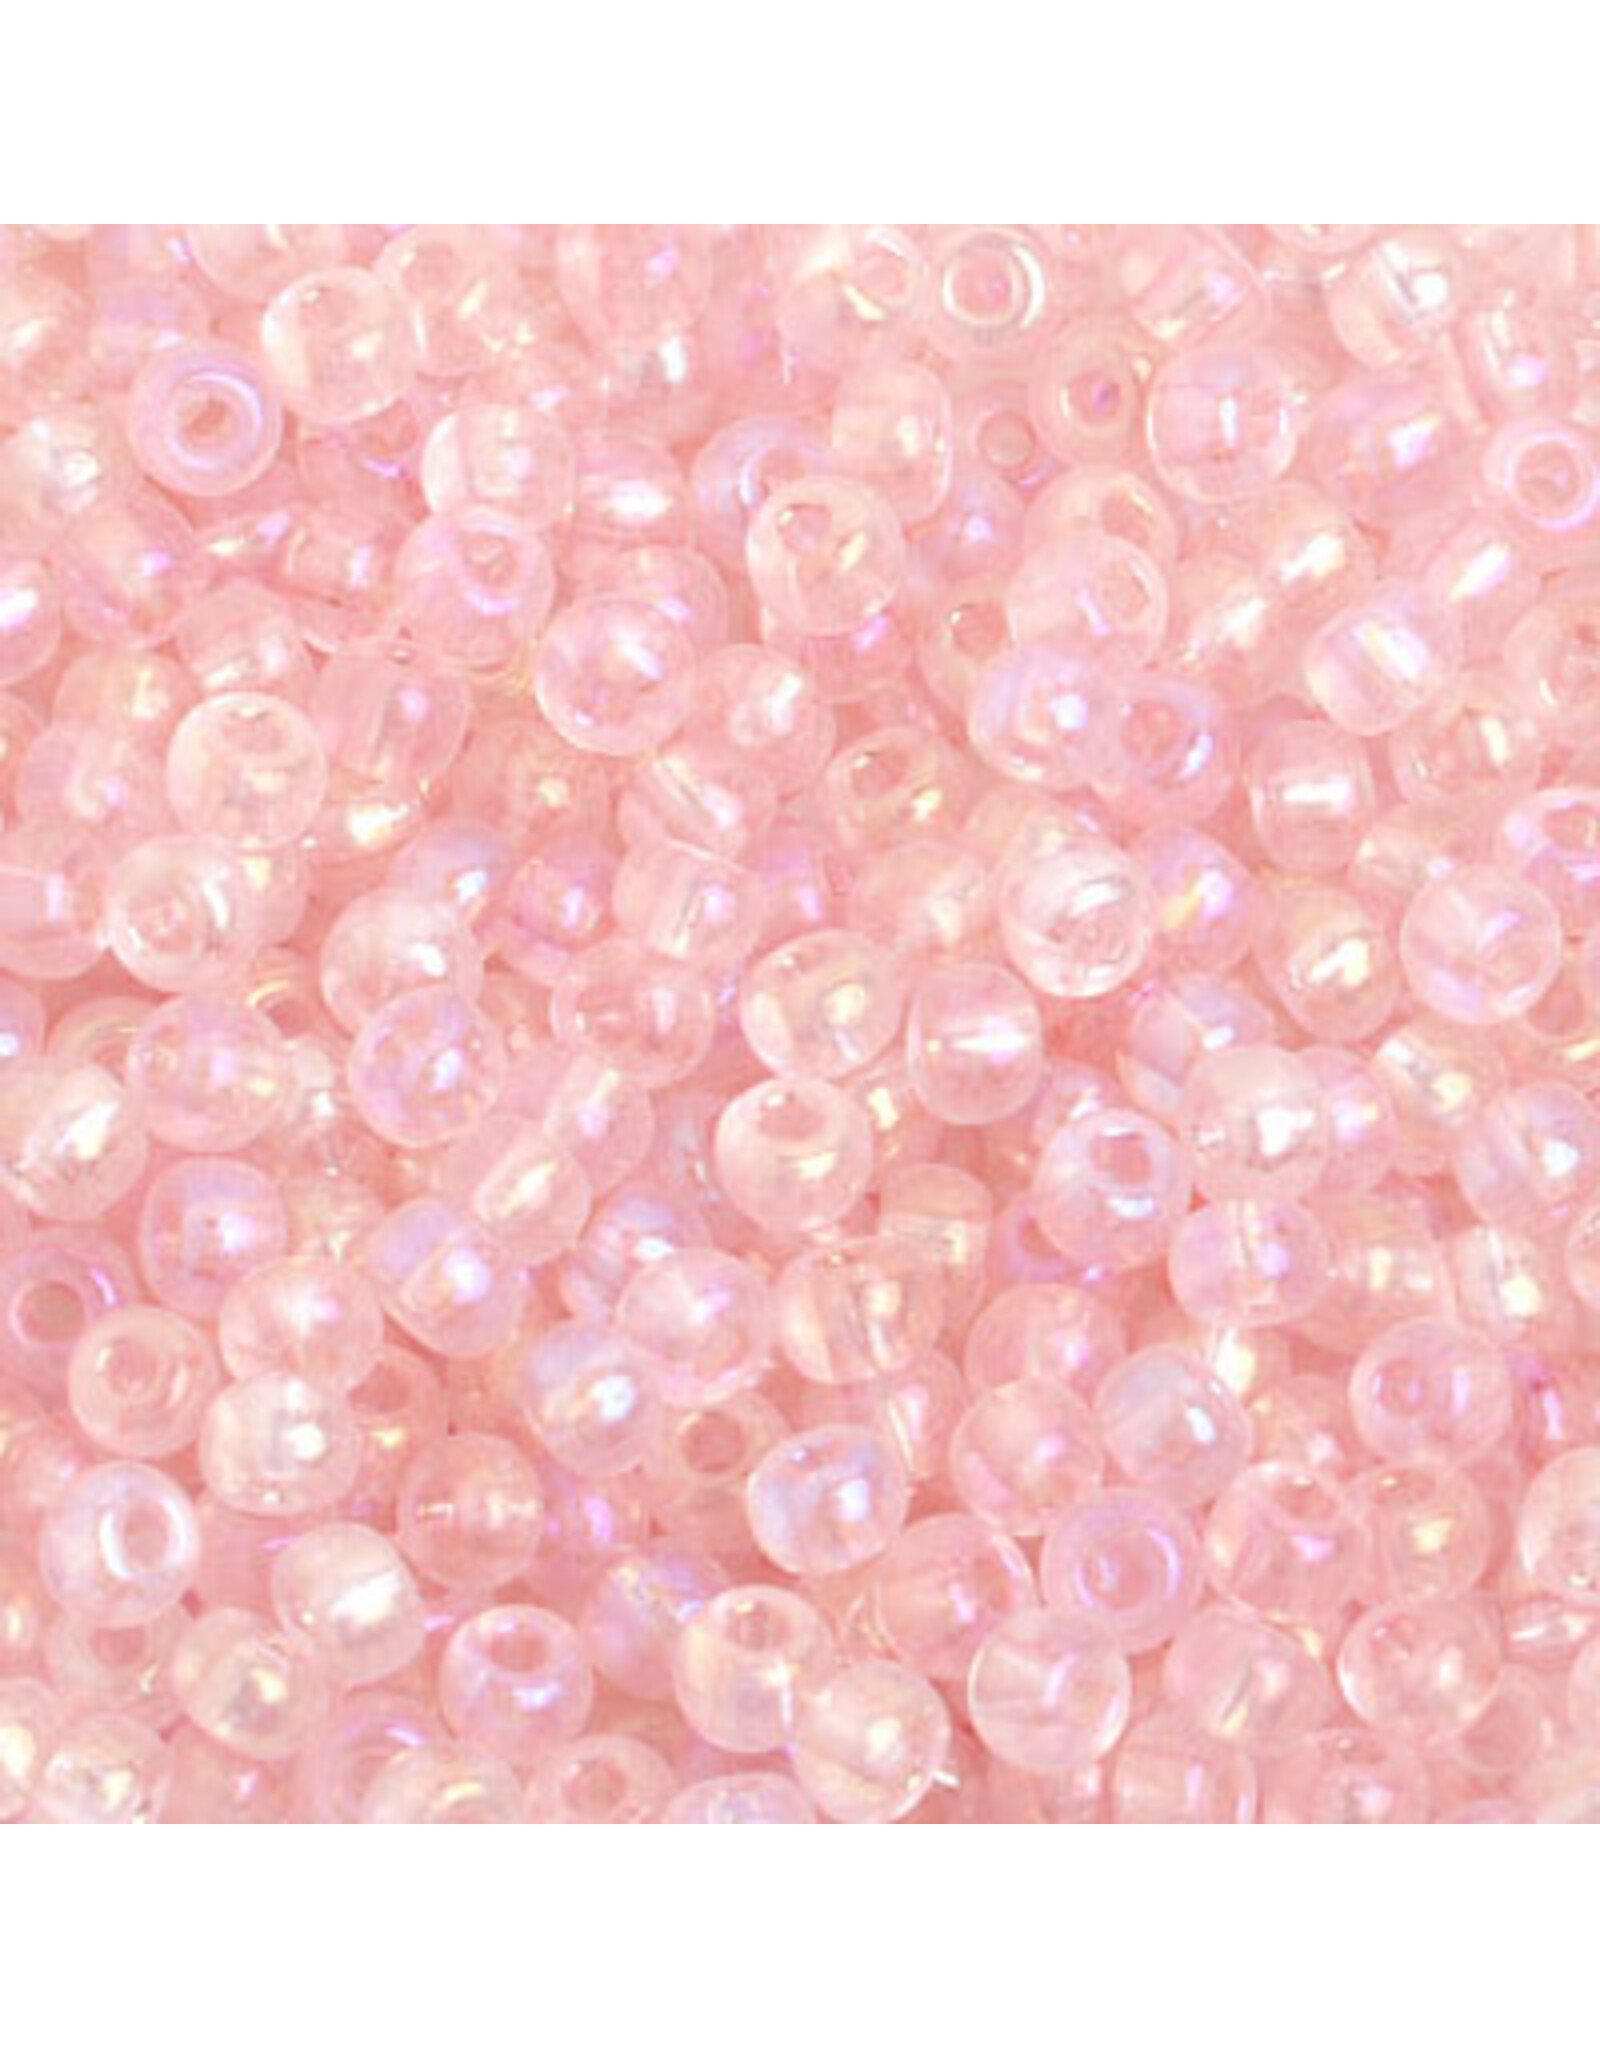 Czech 401669  6  Seed  Transparent Pink AB